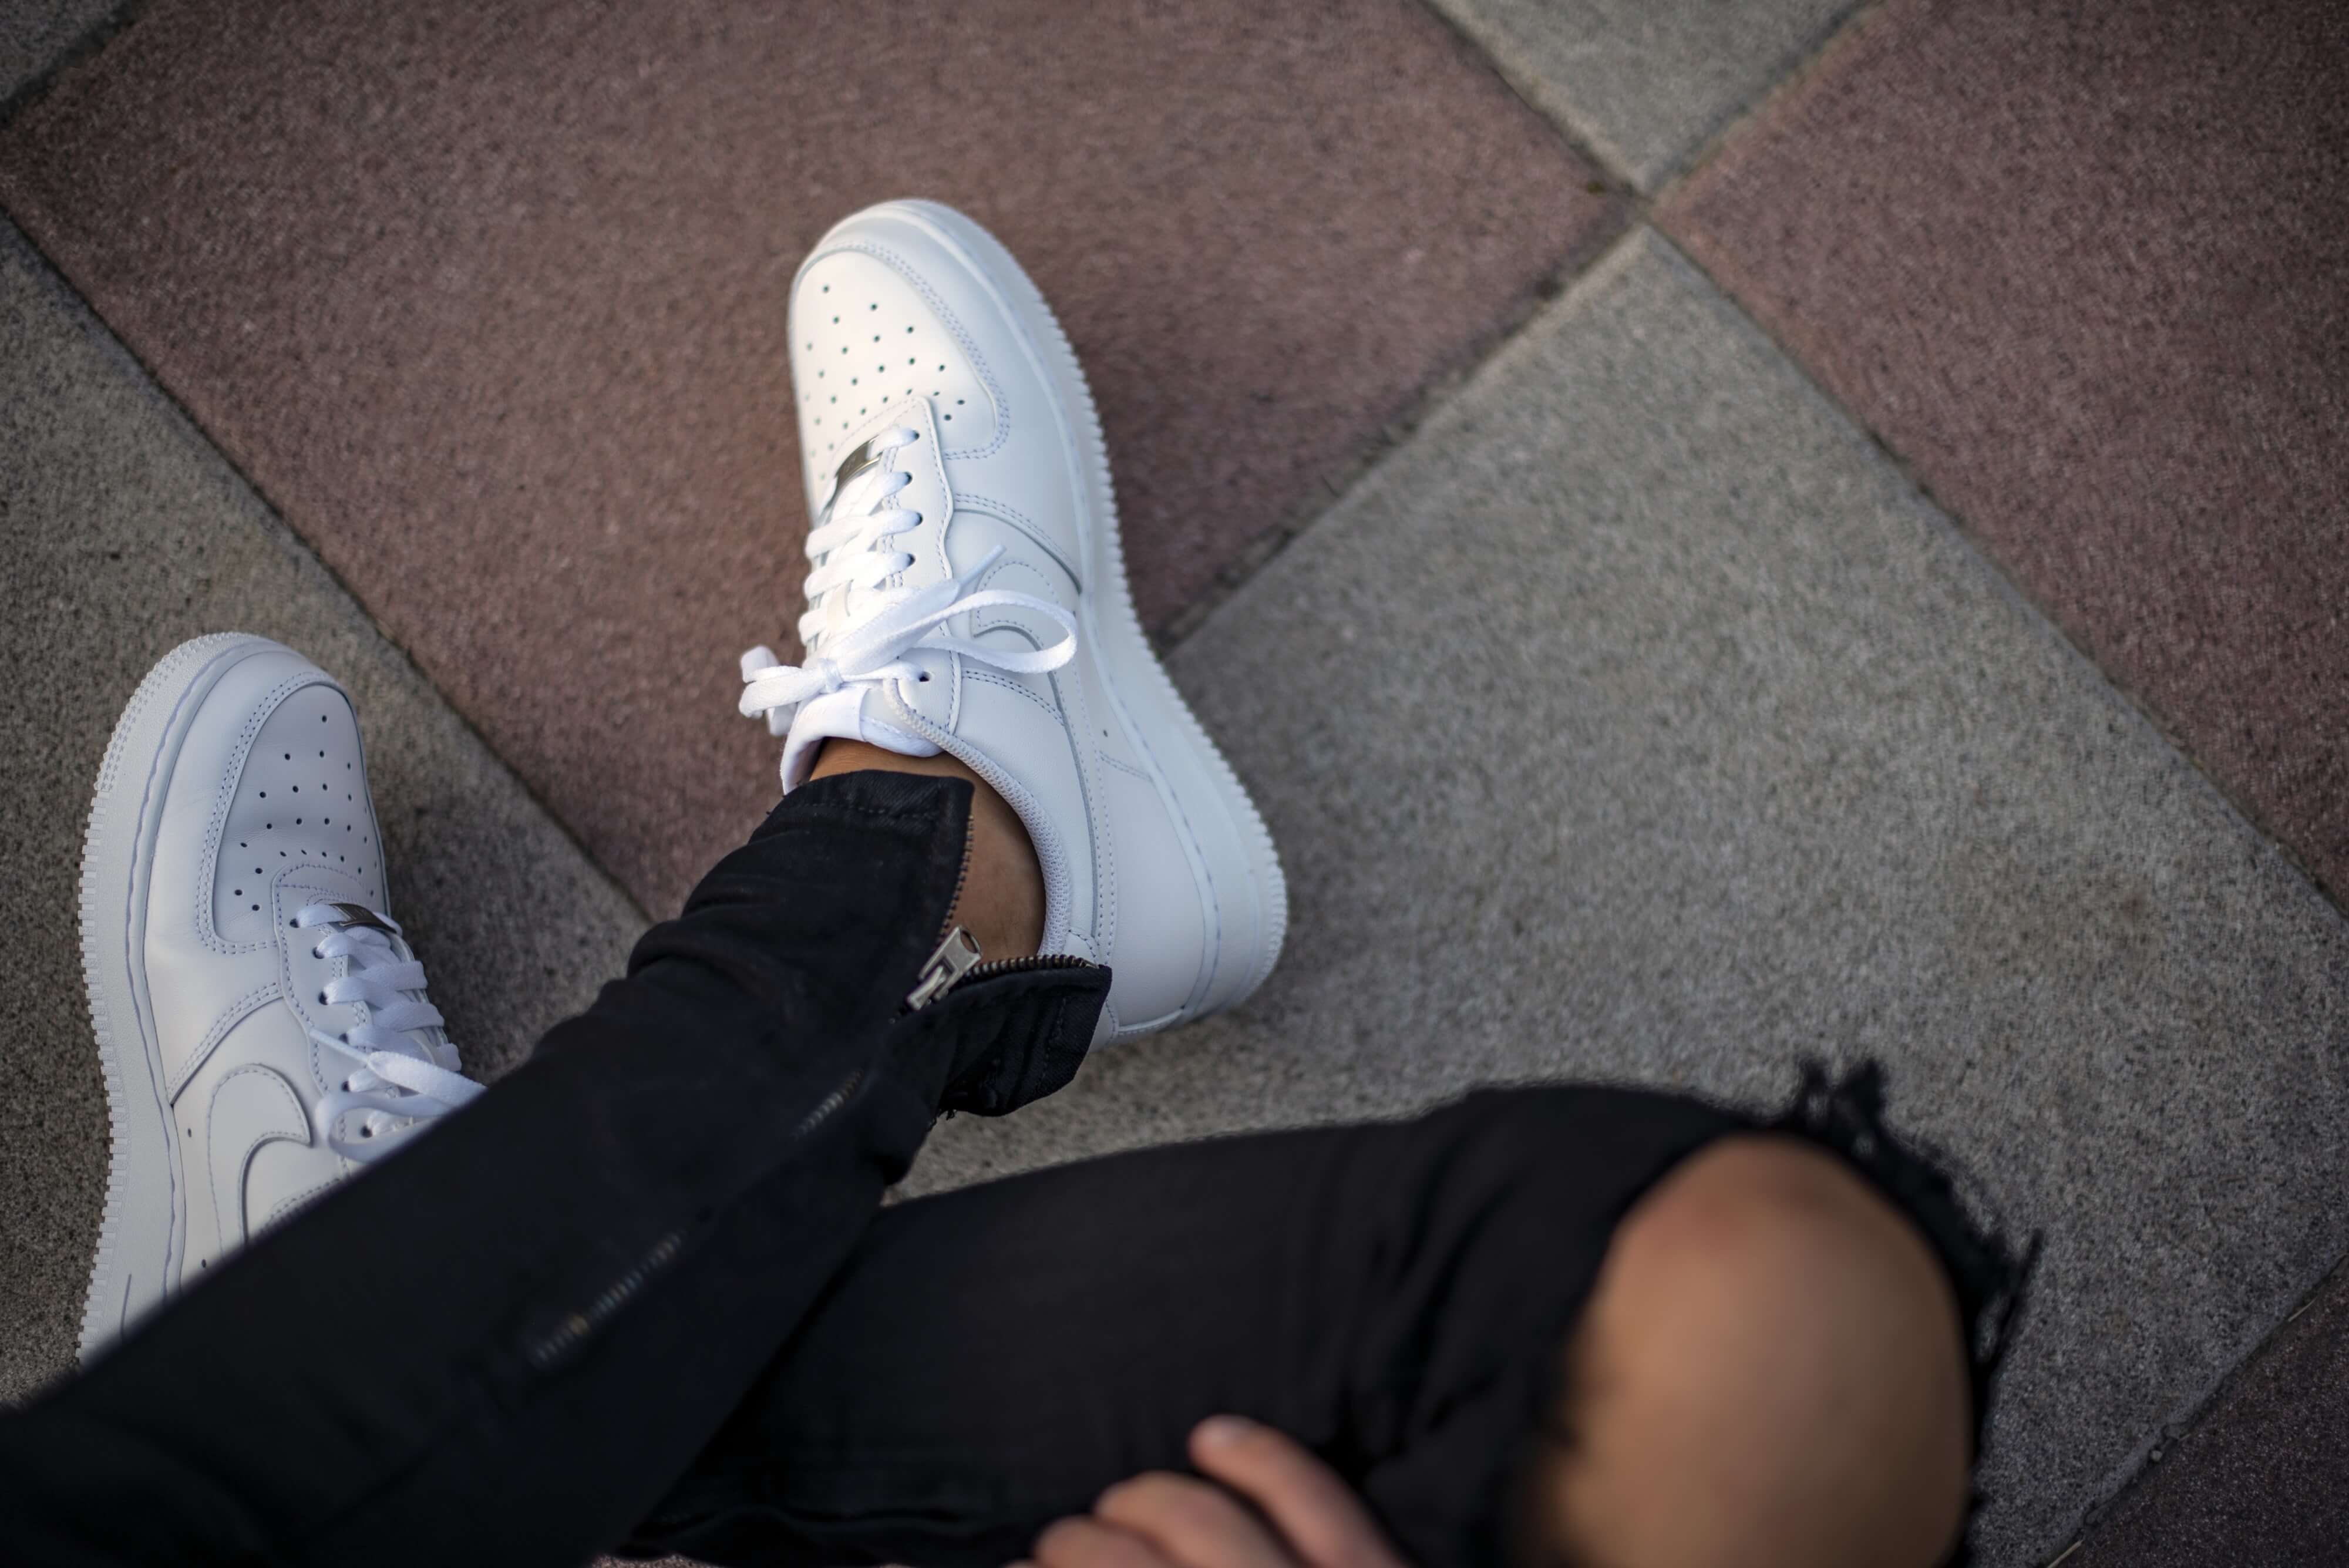 Kultowe buty damskie Nike Air Force 1 - jakie modele są obecnie na topie? | Blog Lifestyle and Beauty - Personal by